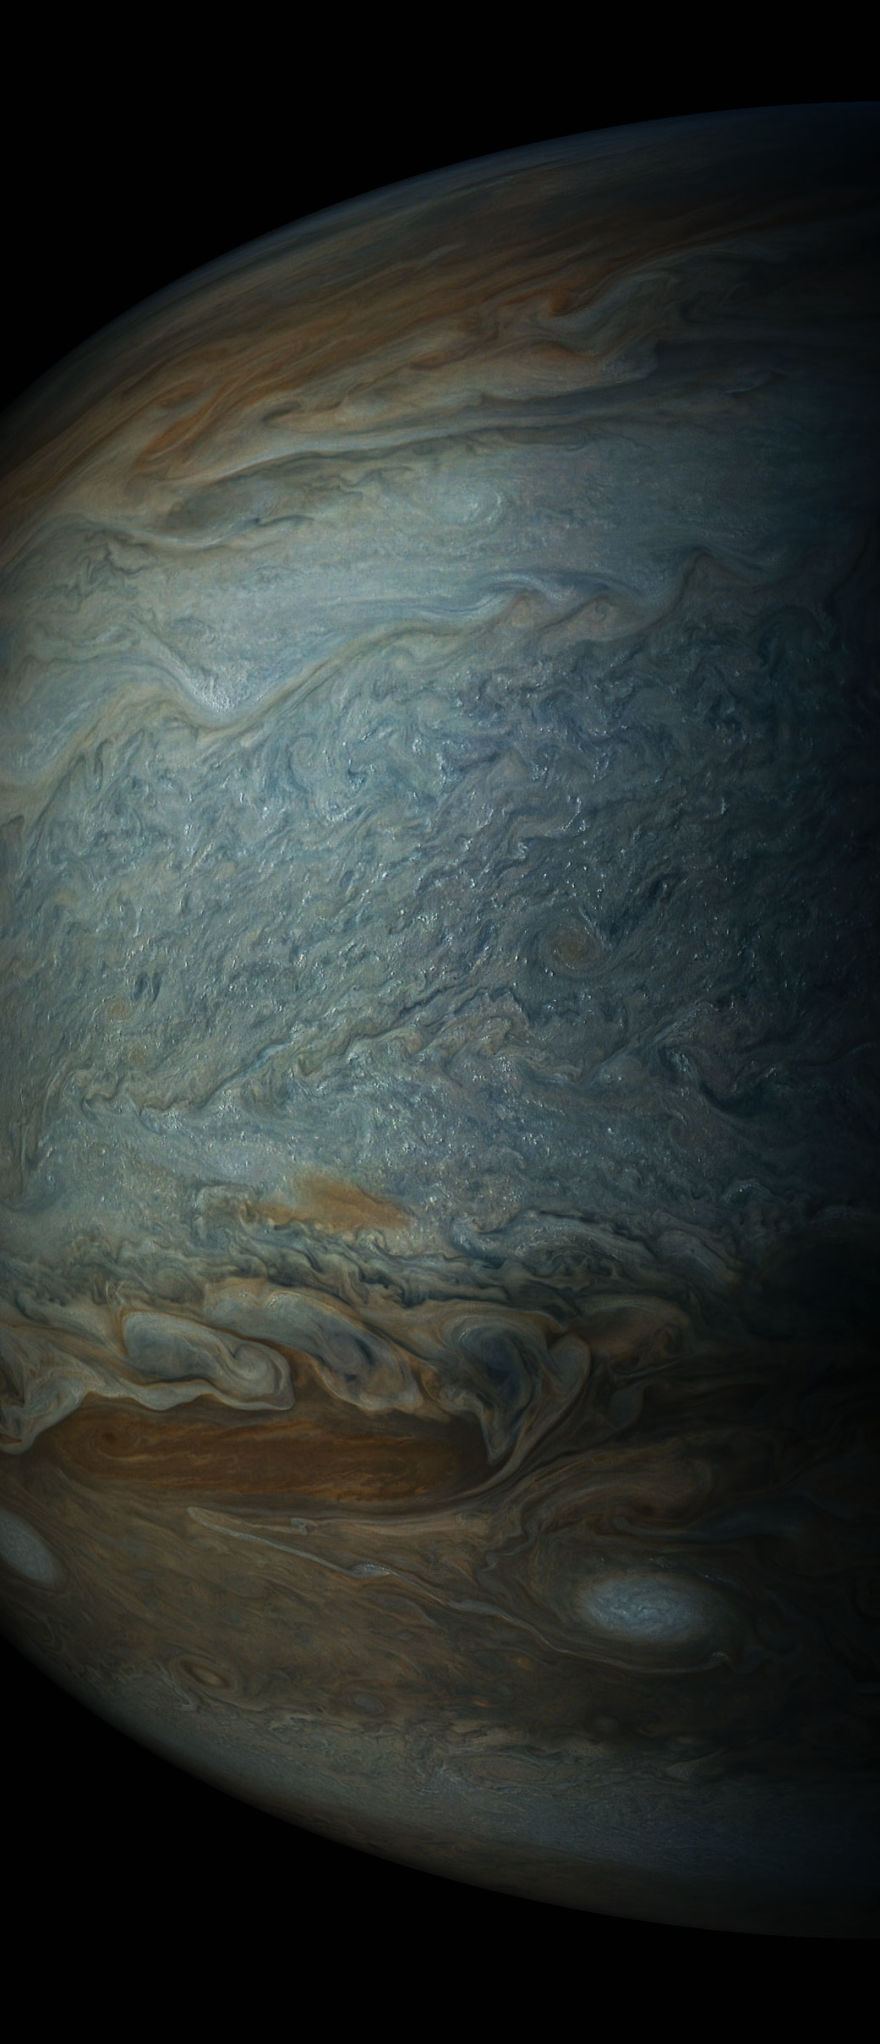 Fotos de Júpiter